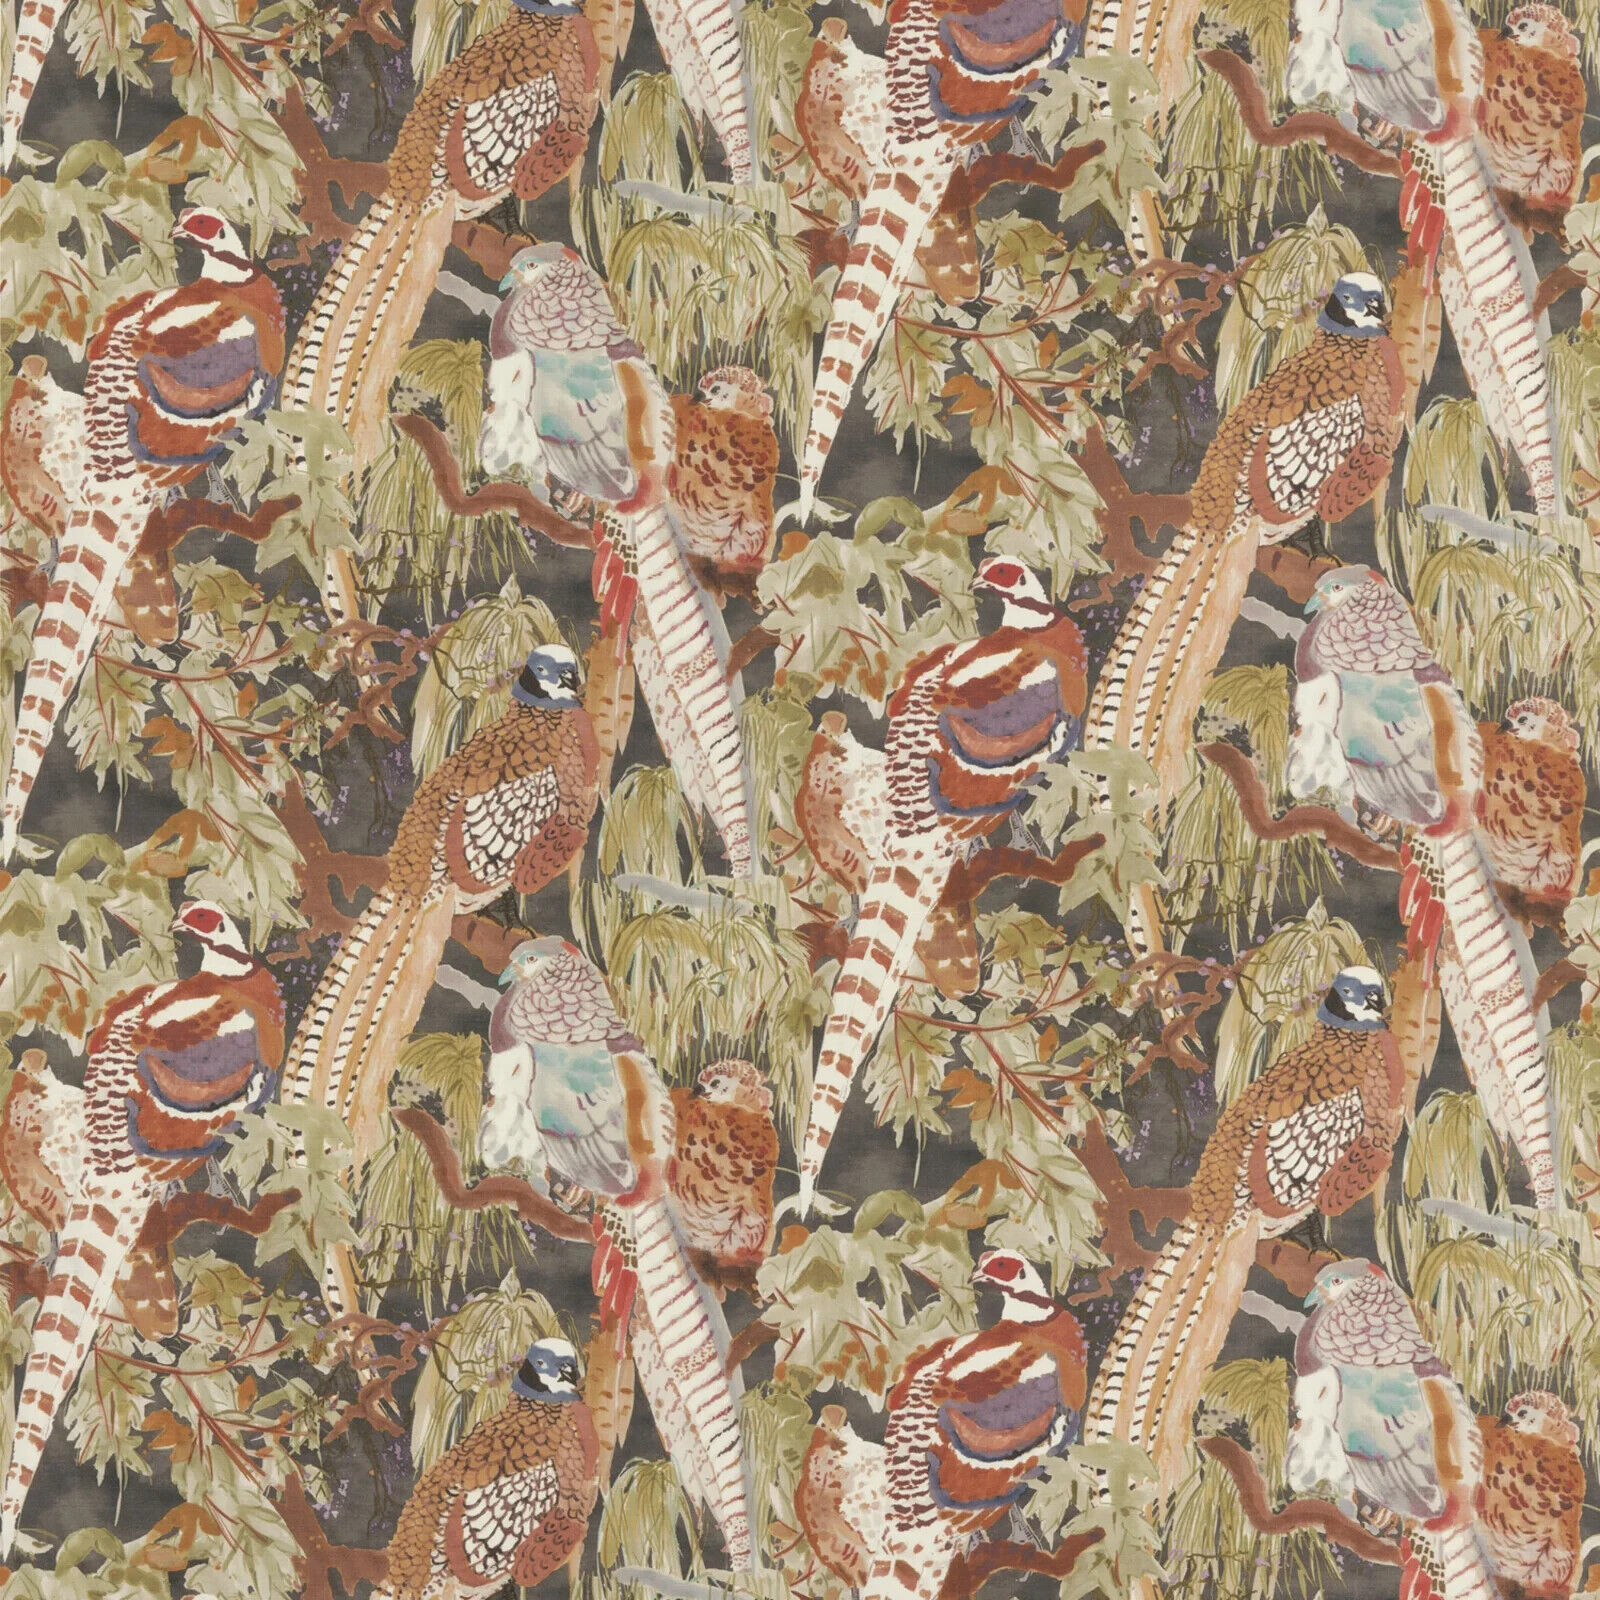 Mulberry Pheasant Quail Print Fabric- Game Birds Linen / Charcoal 2.90 yd FD269.